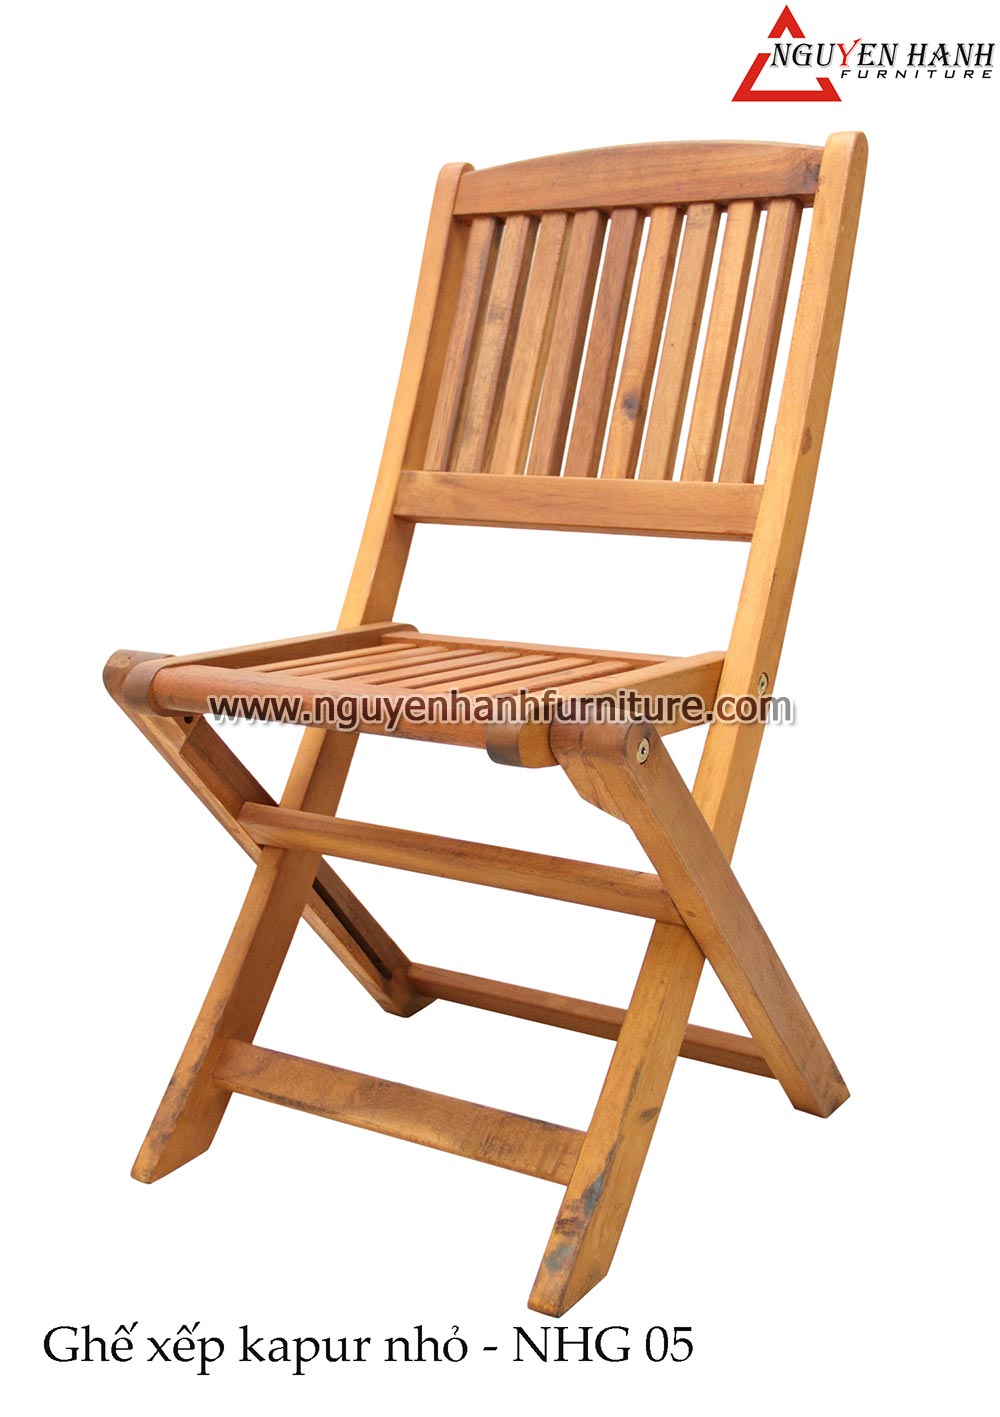 Name product: Small kapur chair NHG05 - Dimensions:  - Description: Encalyptus wood